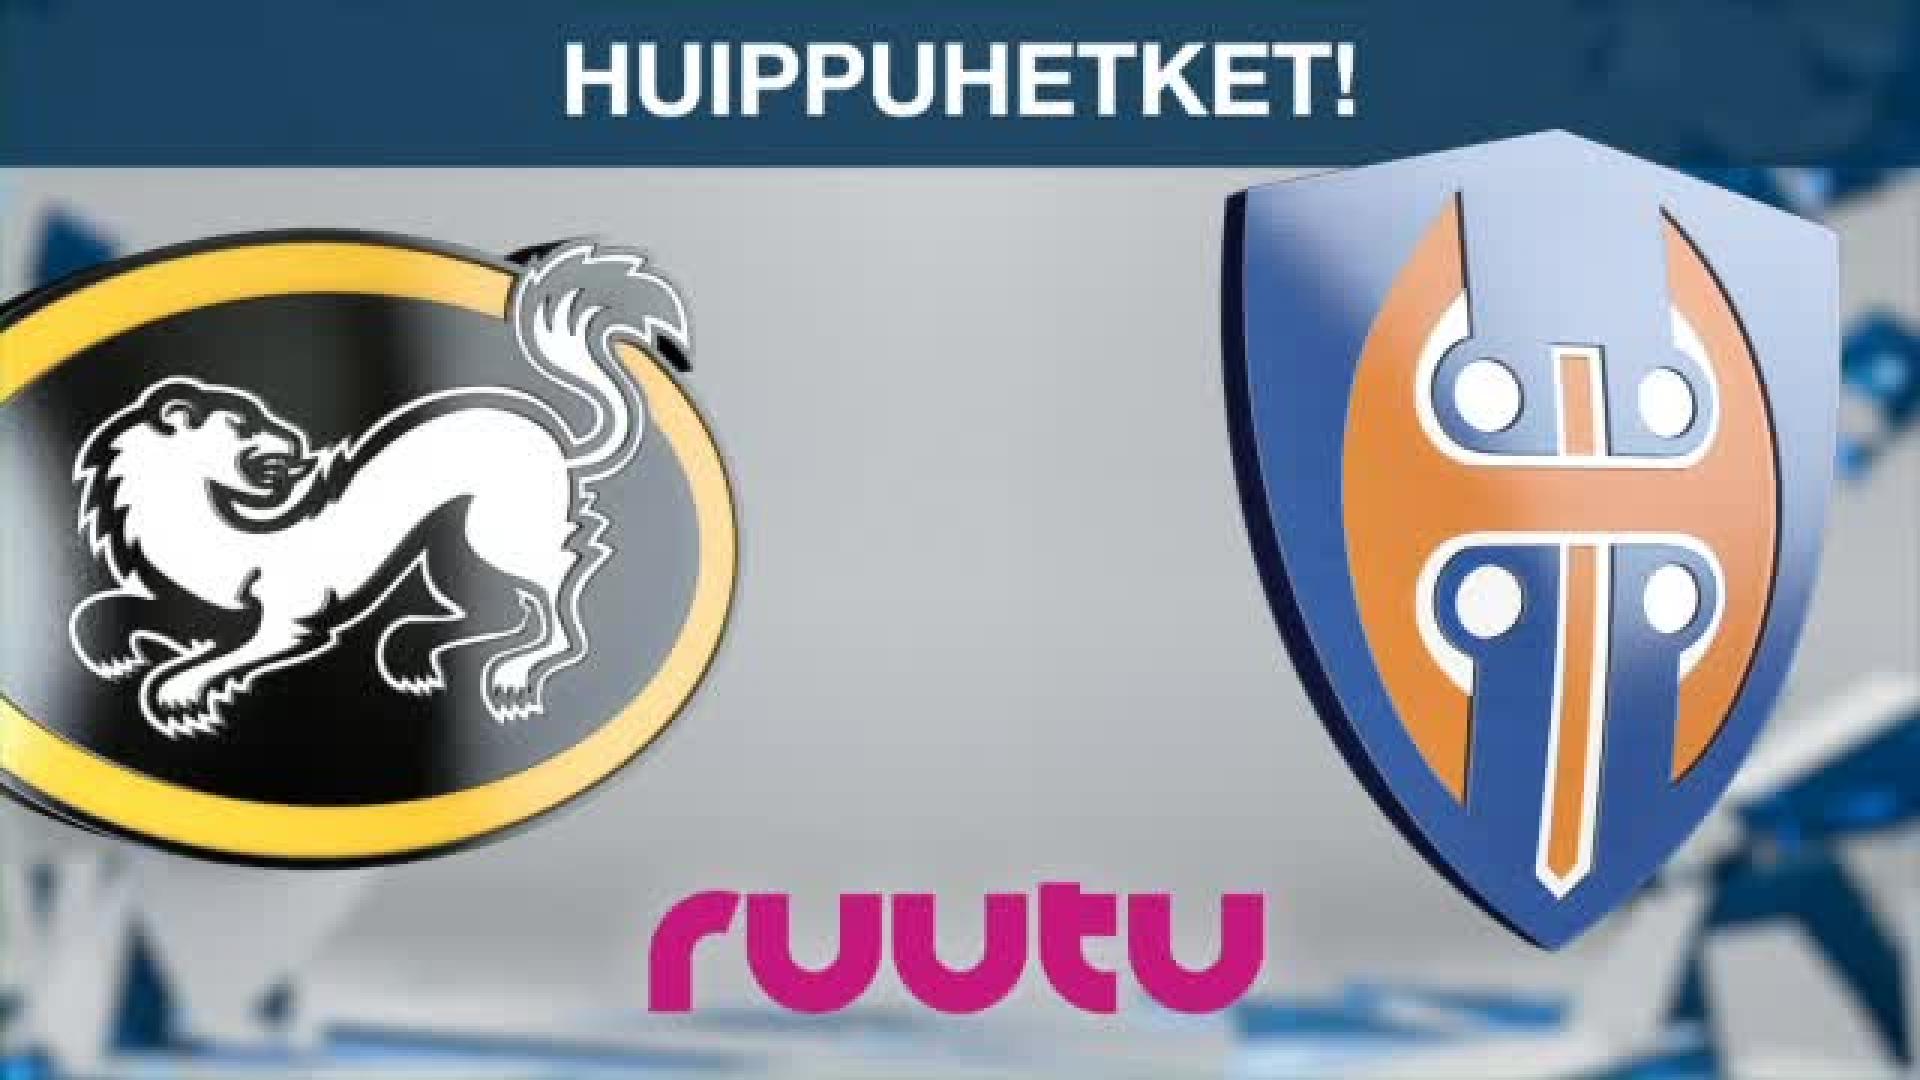 www.ruutu.fi